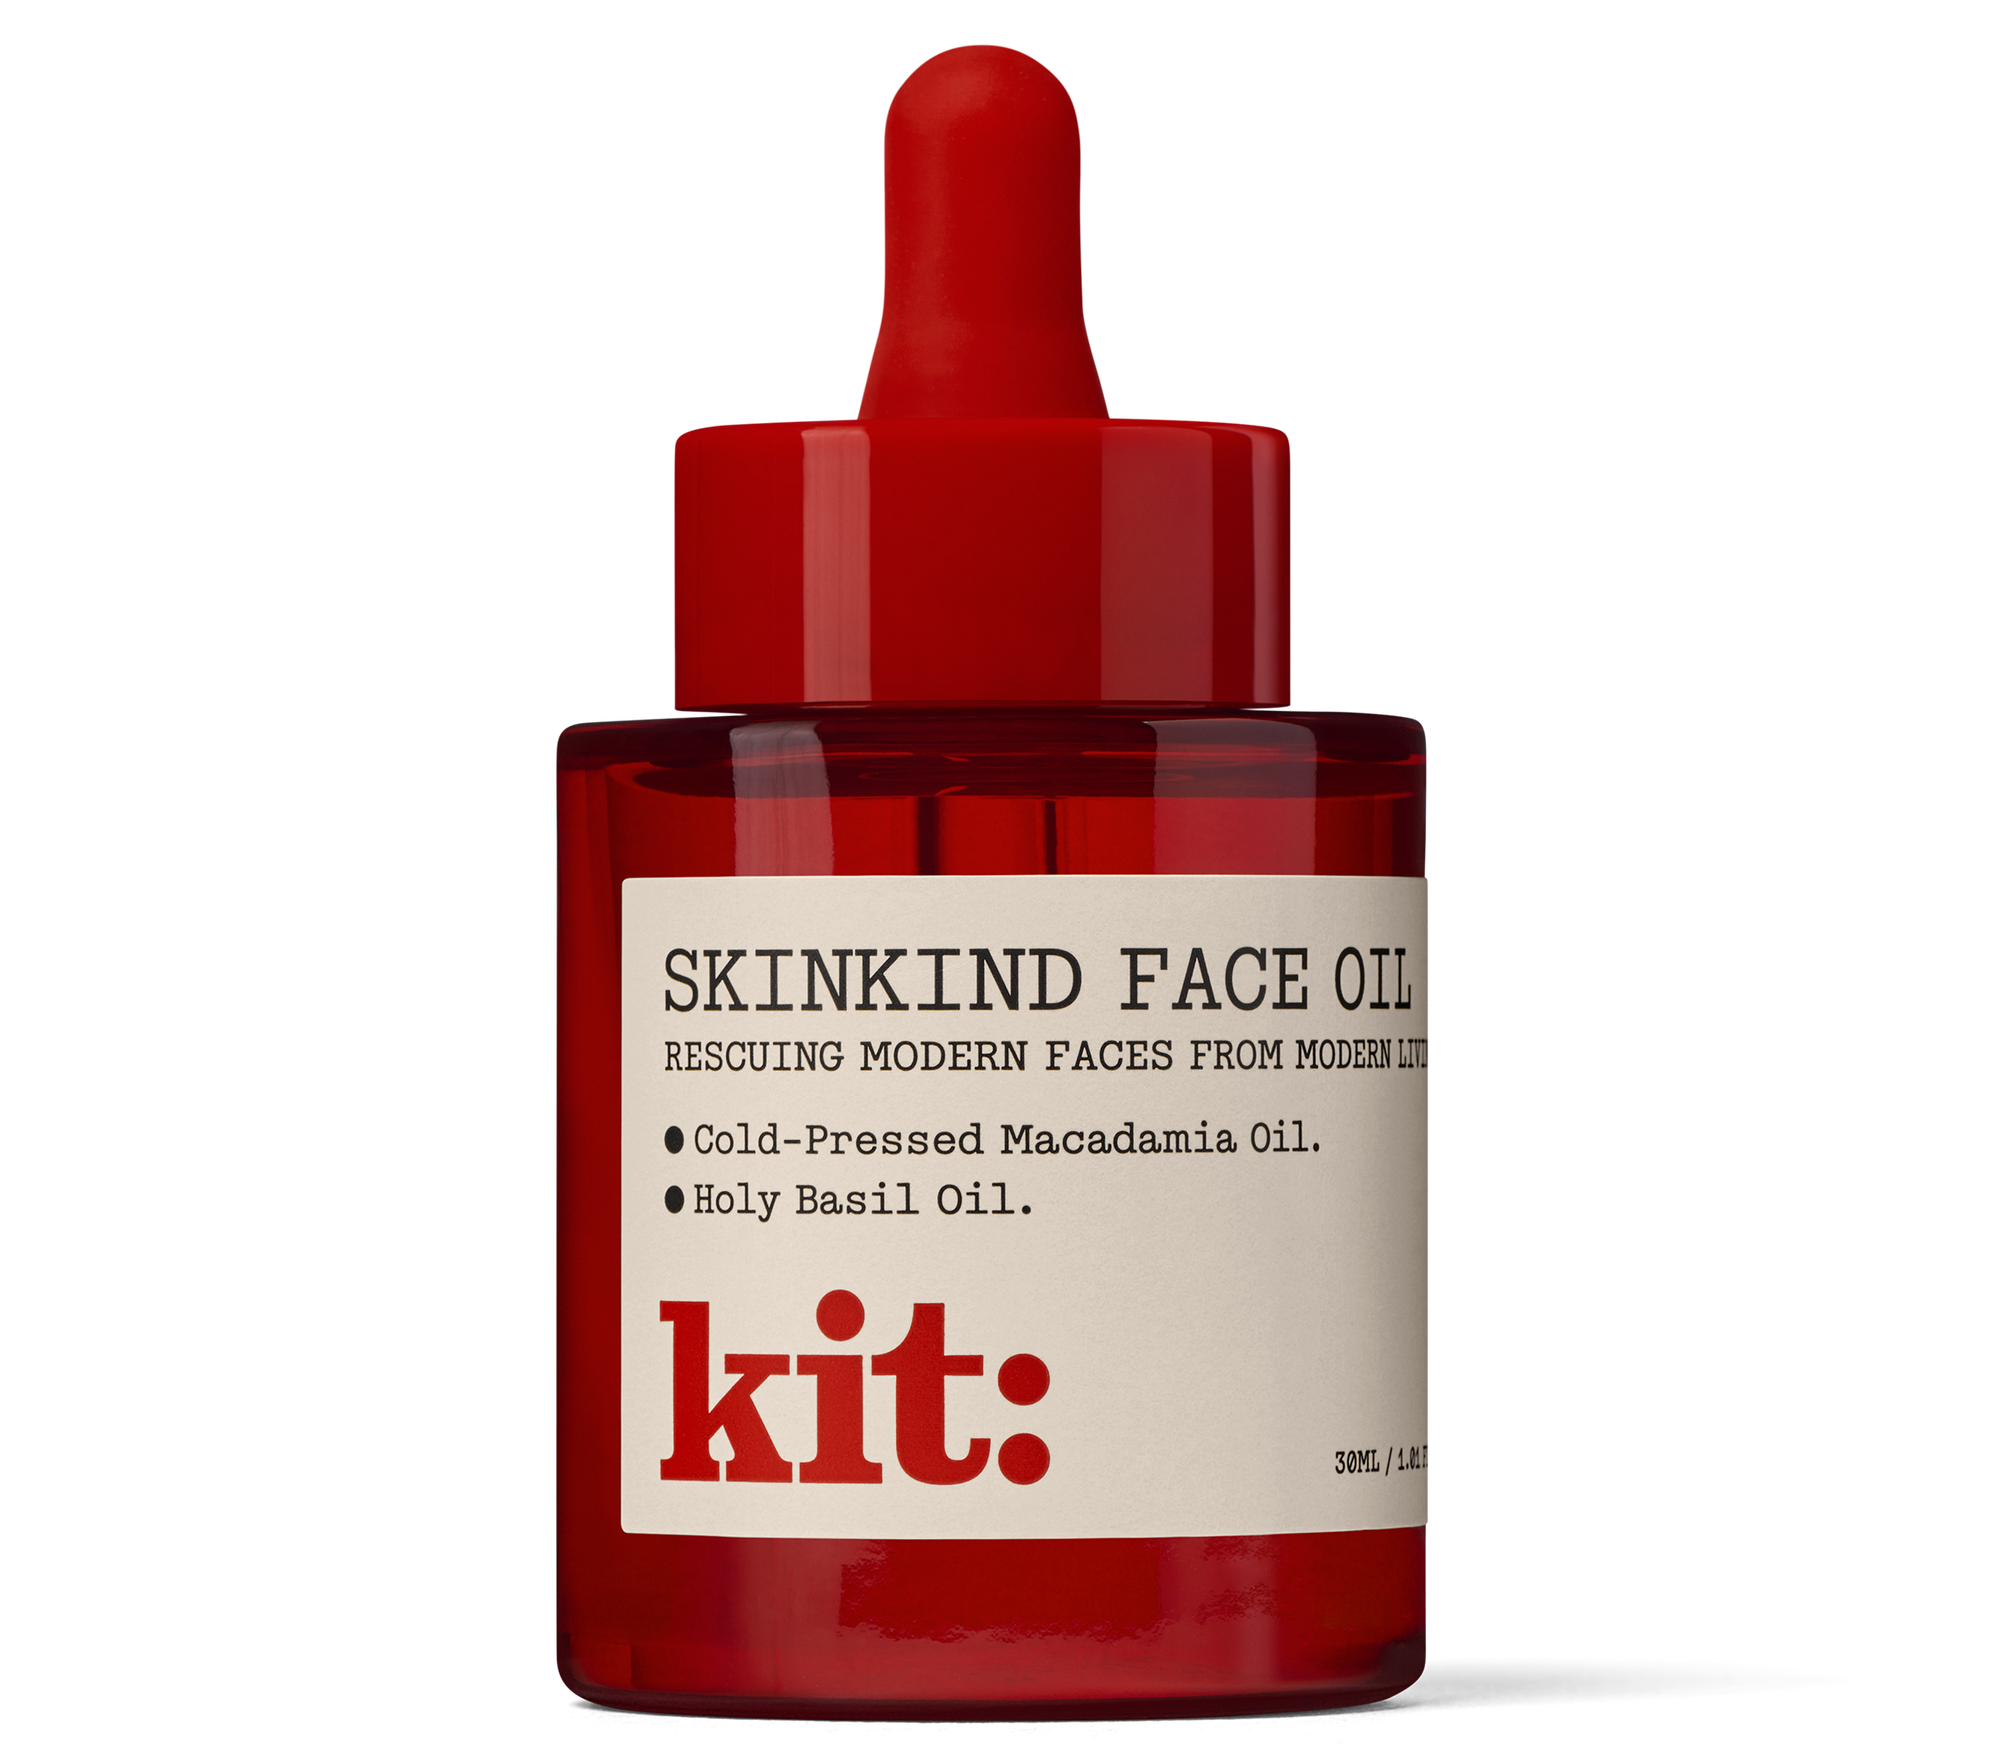 Skinkind Face Oil